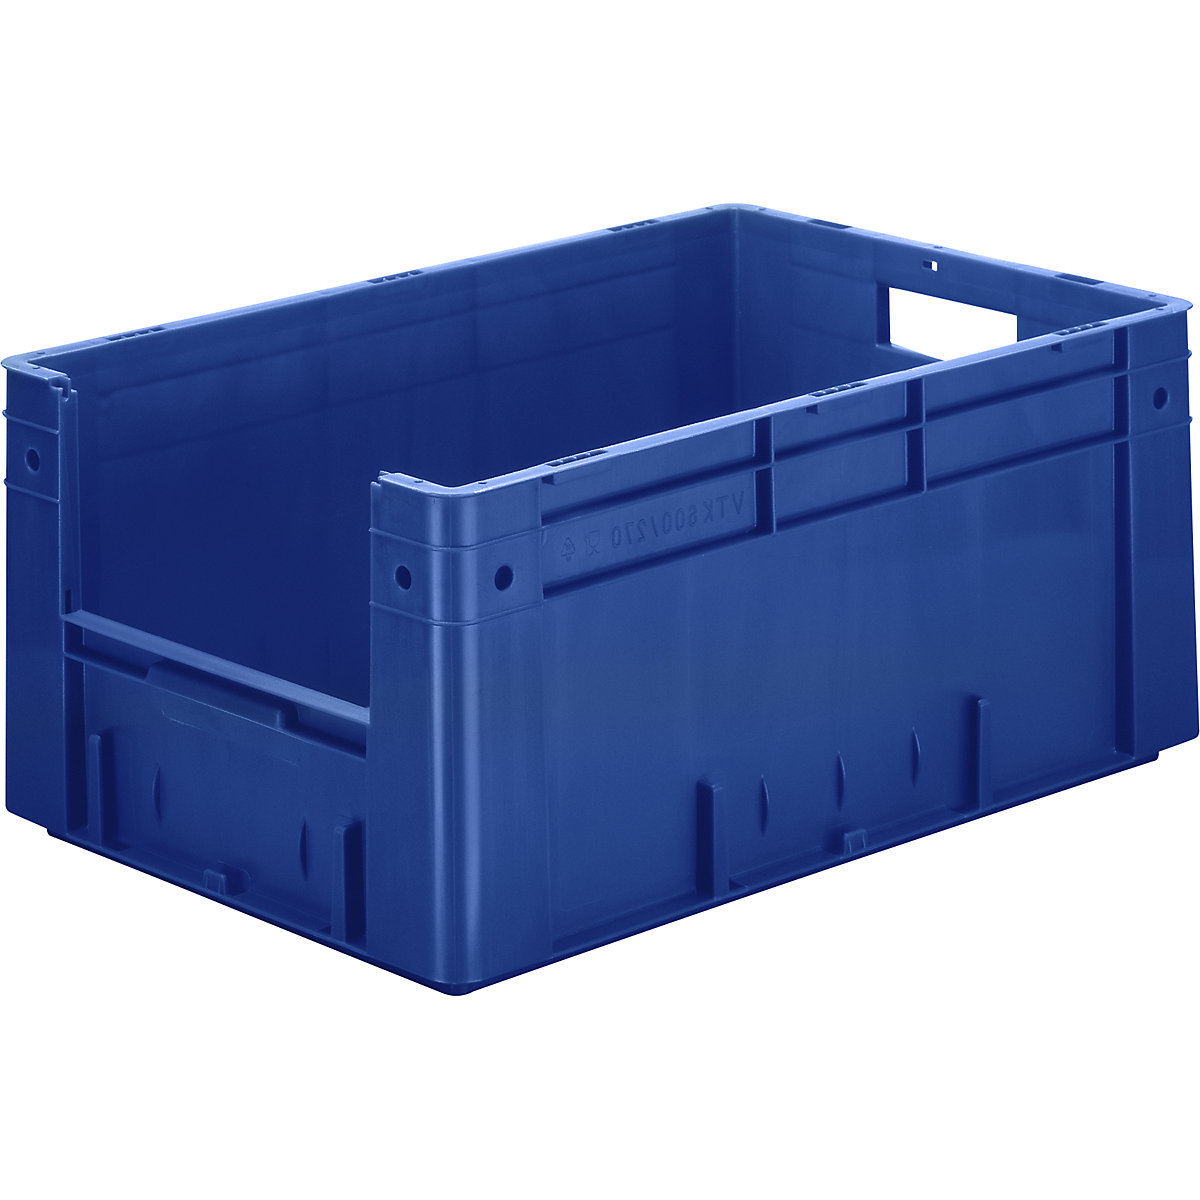 Spremnik za slaganje u EURO formatu, volumen 50 l, ŠxVxD 600 x 400 x 270 mm, pak. 2 kom., u plavoj boji-4